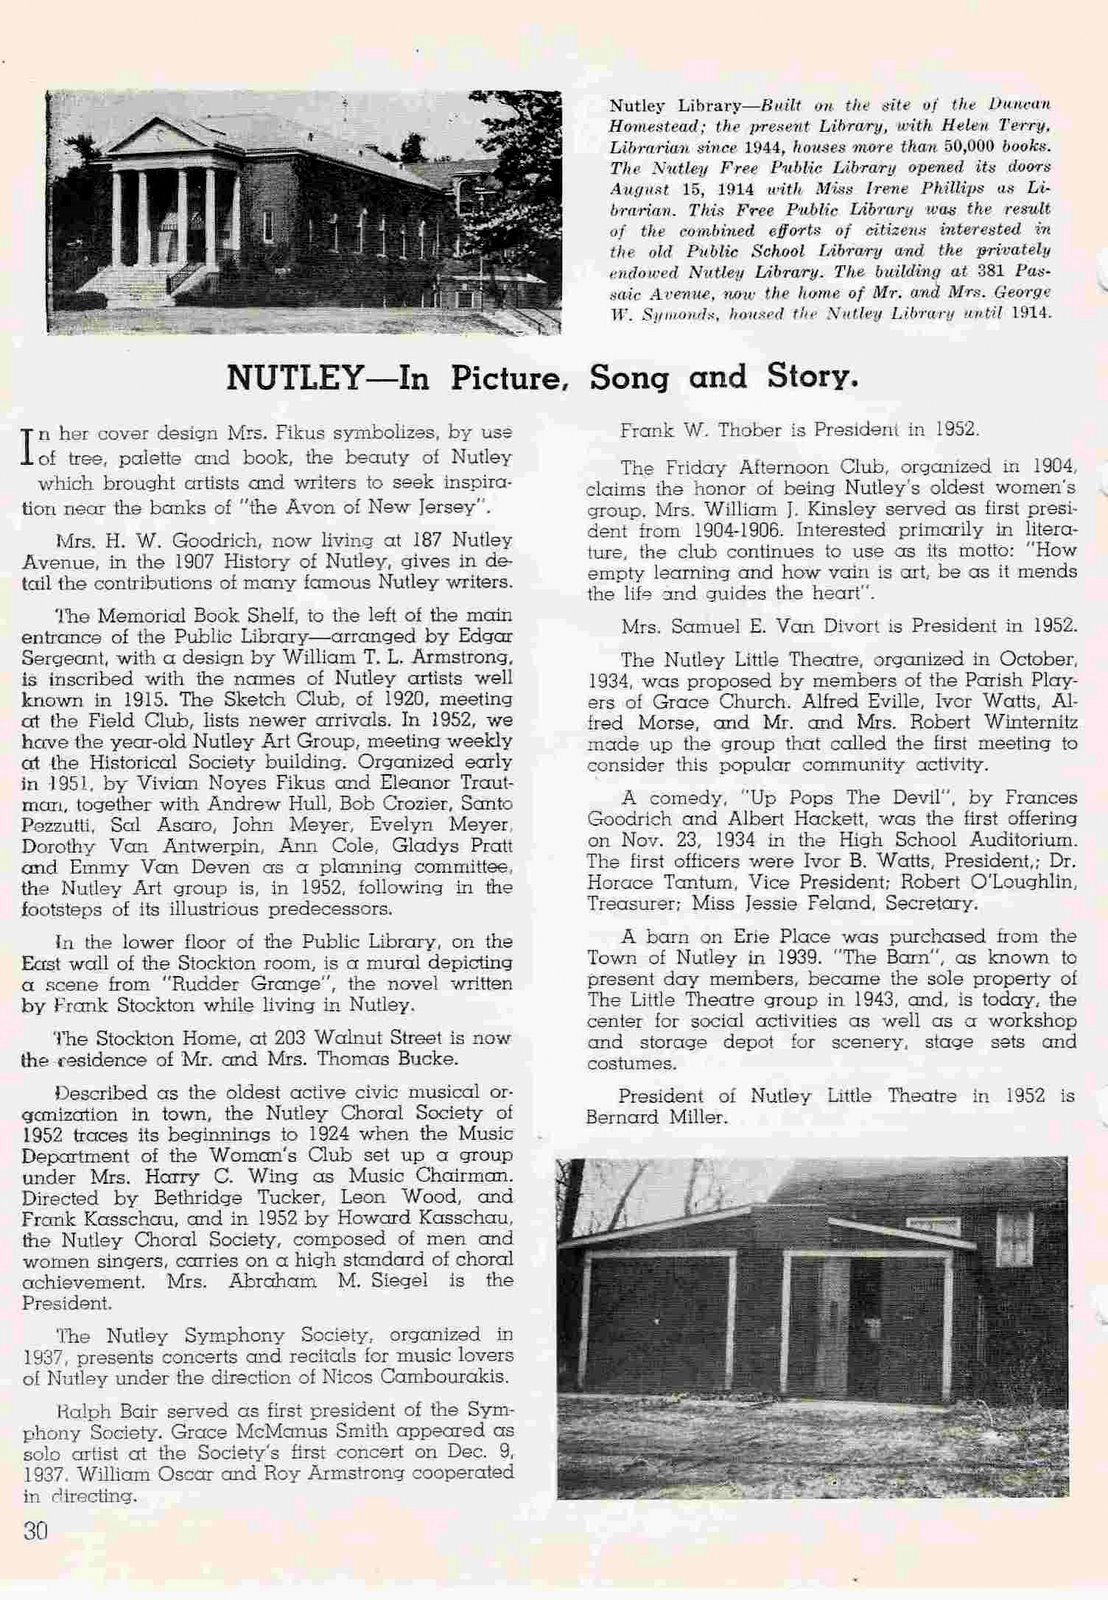 NUTLEY 50TH ANNIVERSARY Nutley Historical Society, Nutley Museum